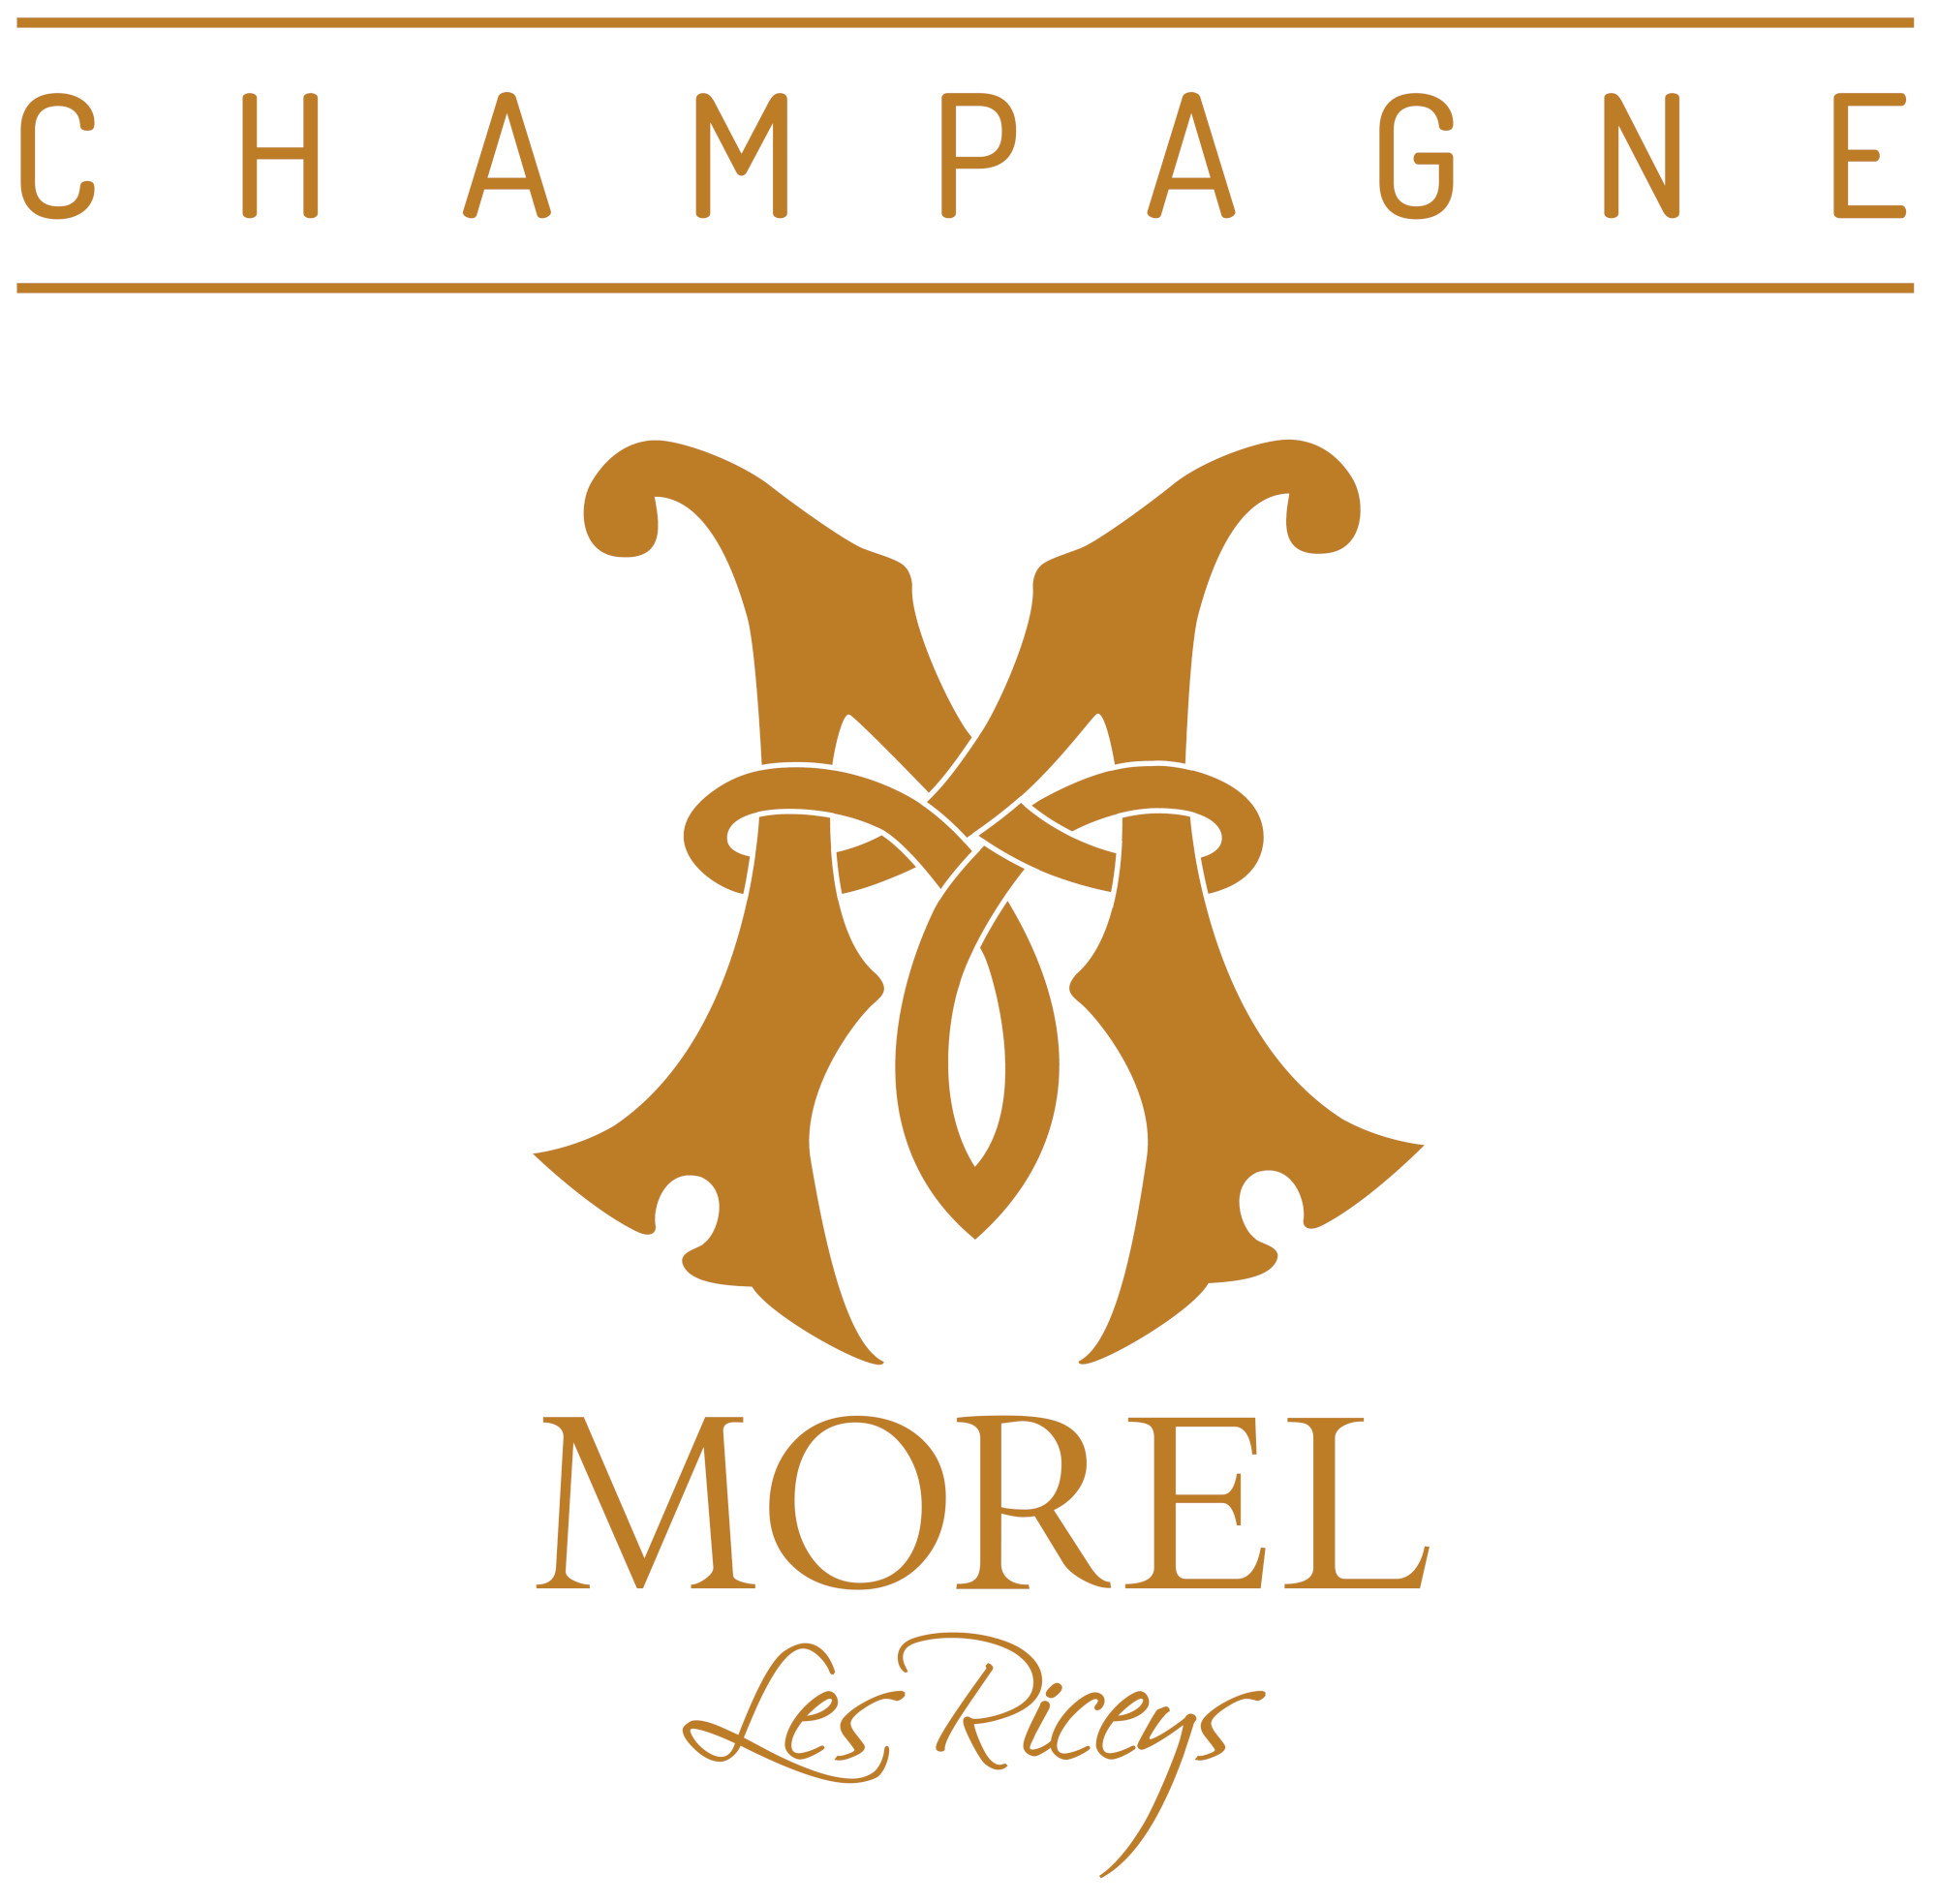 Champagne Morel Père & Fils